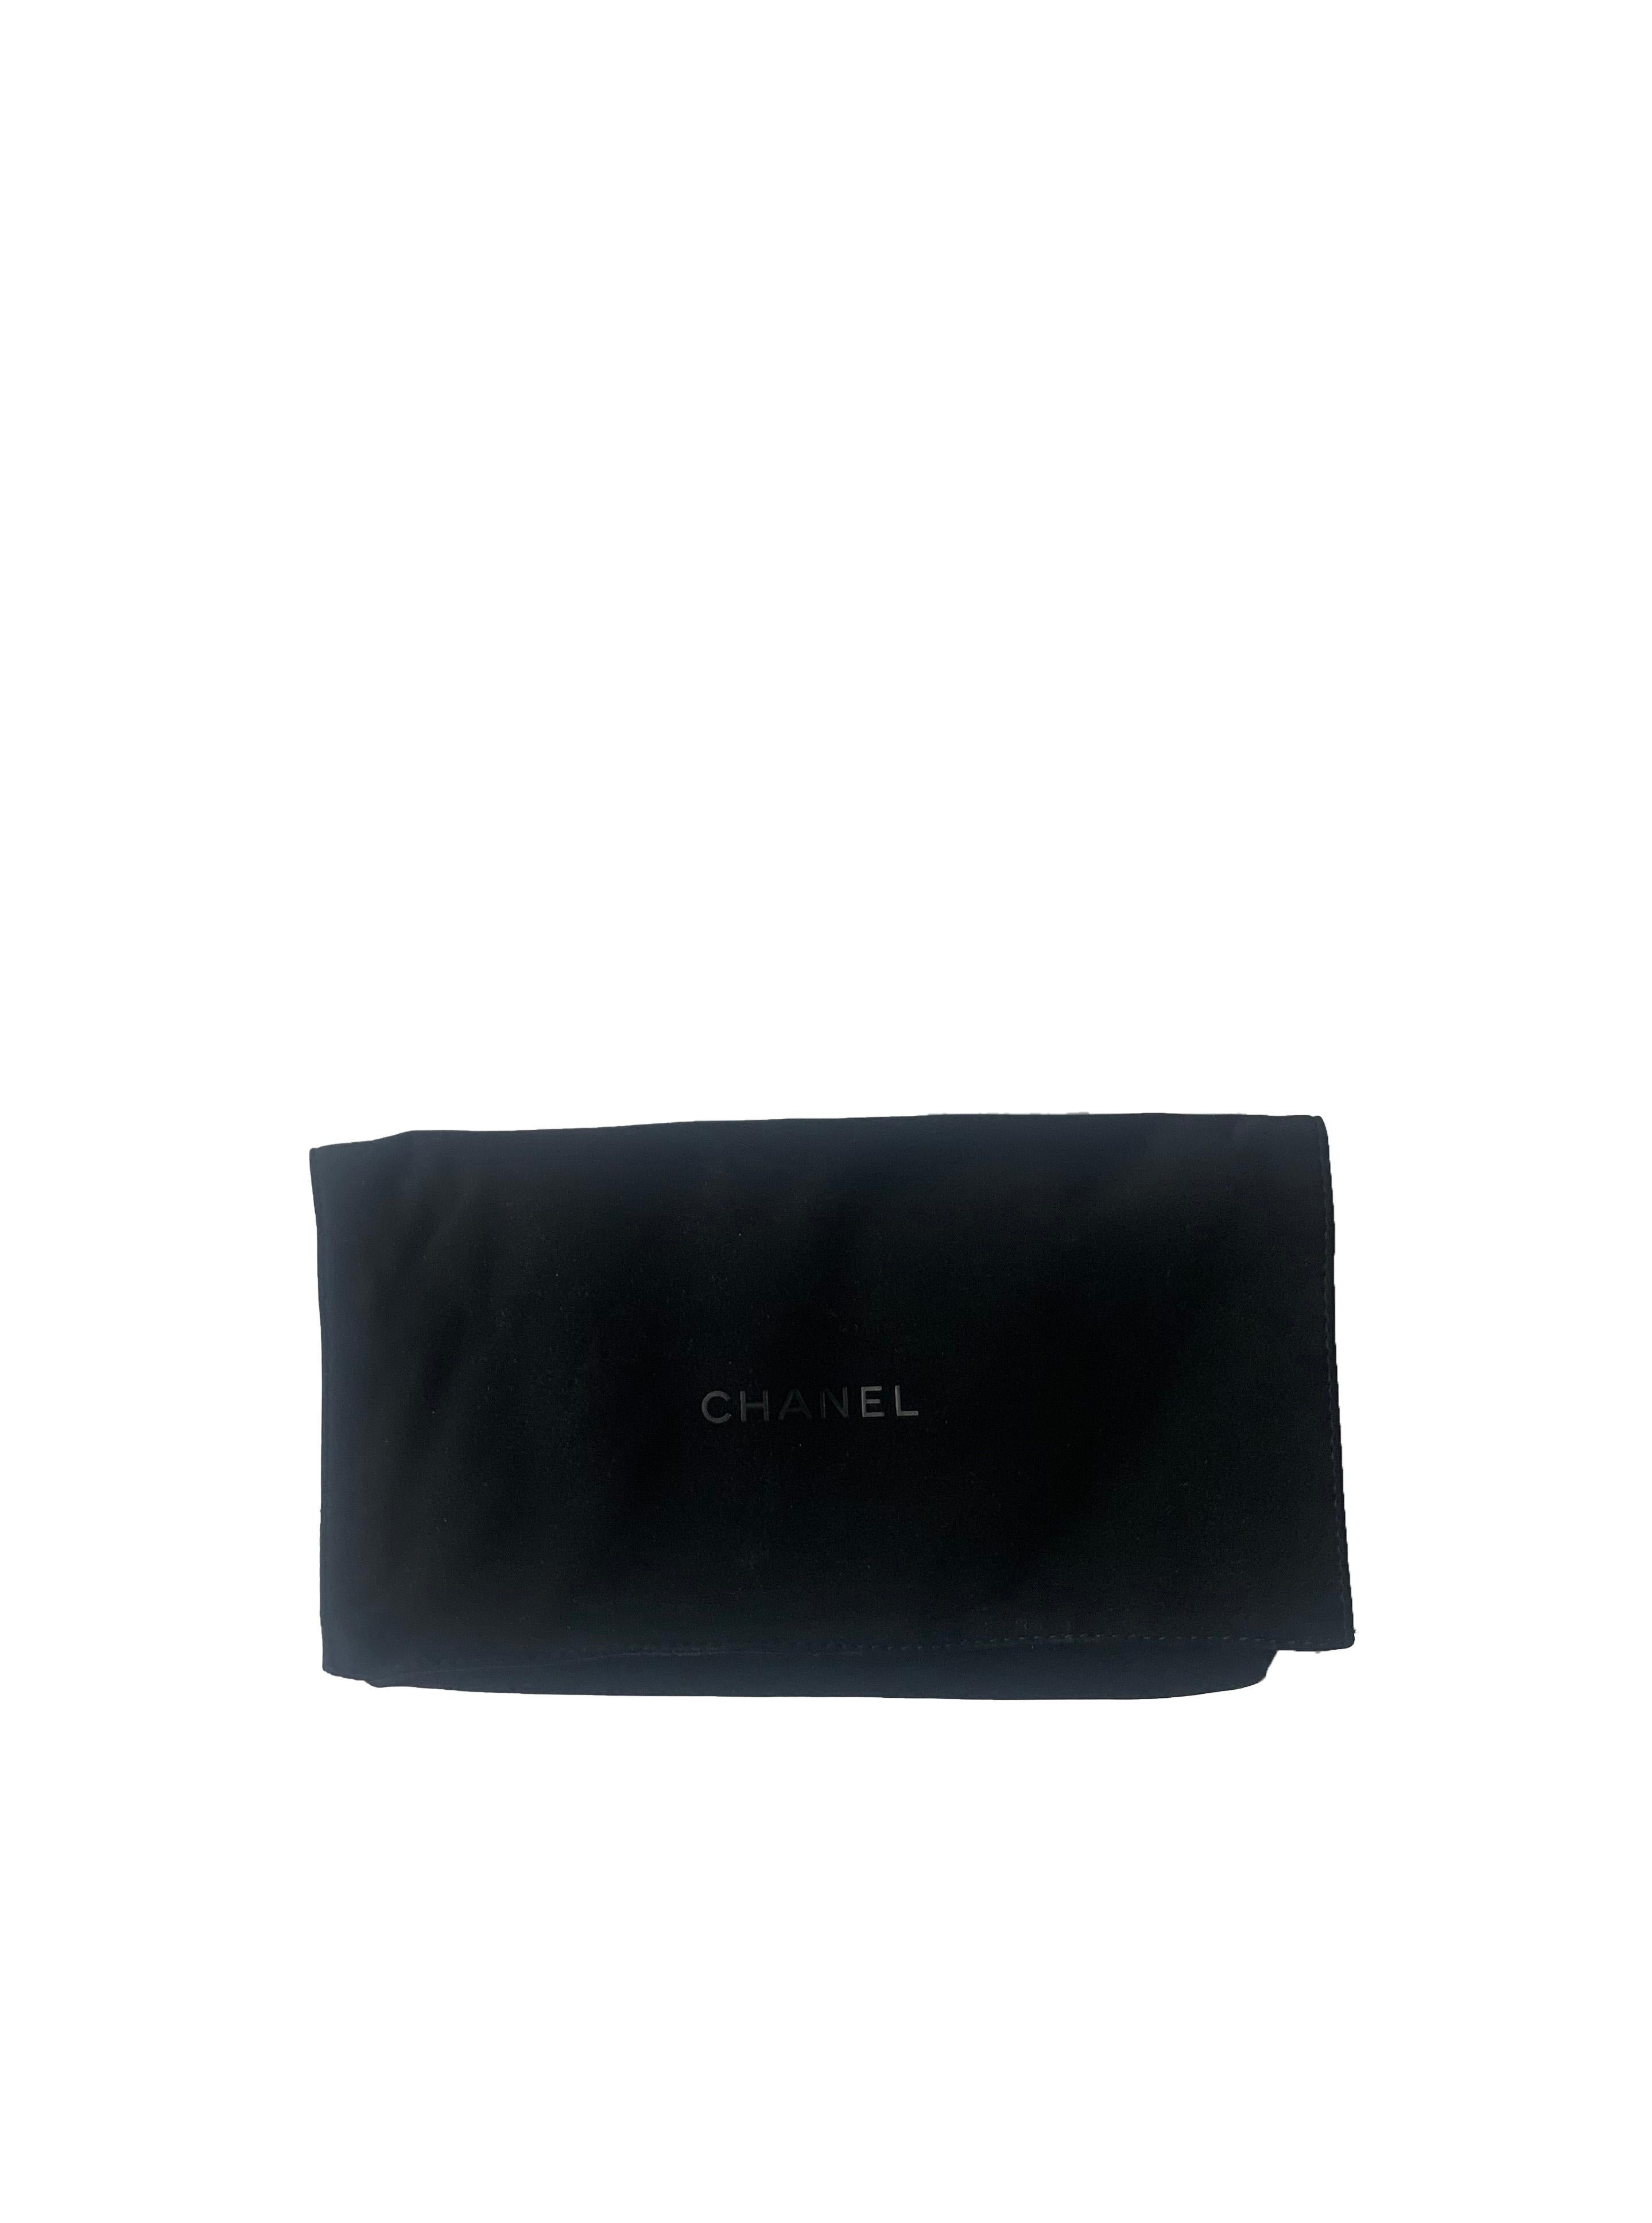 Chanel Black Resin Evening Clutch/Crossbody Bag w. Velvet Quilting rt. $2, 795 6